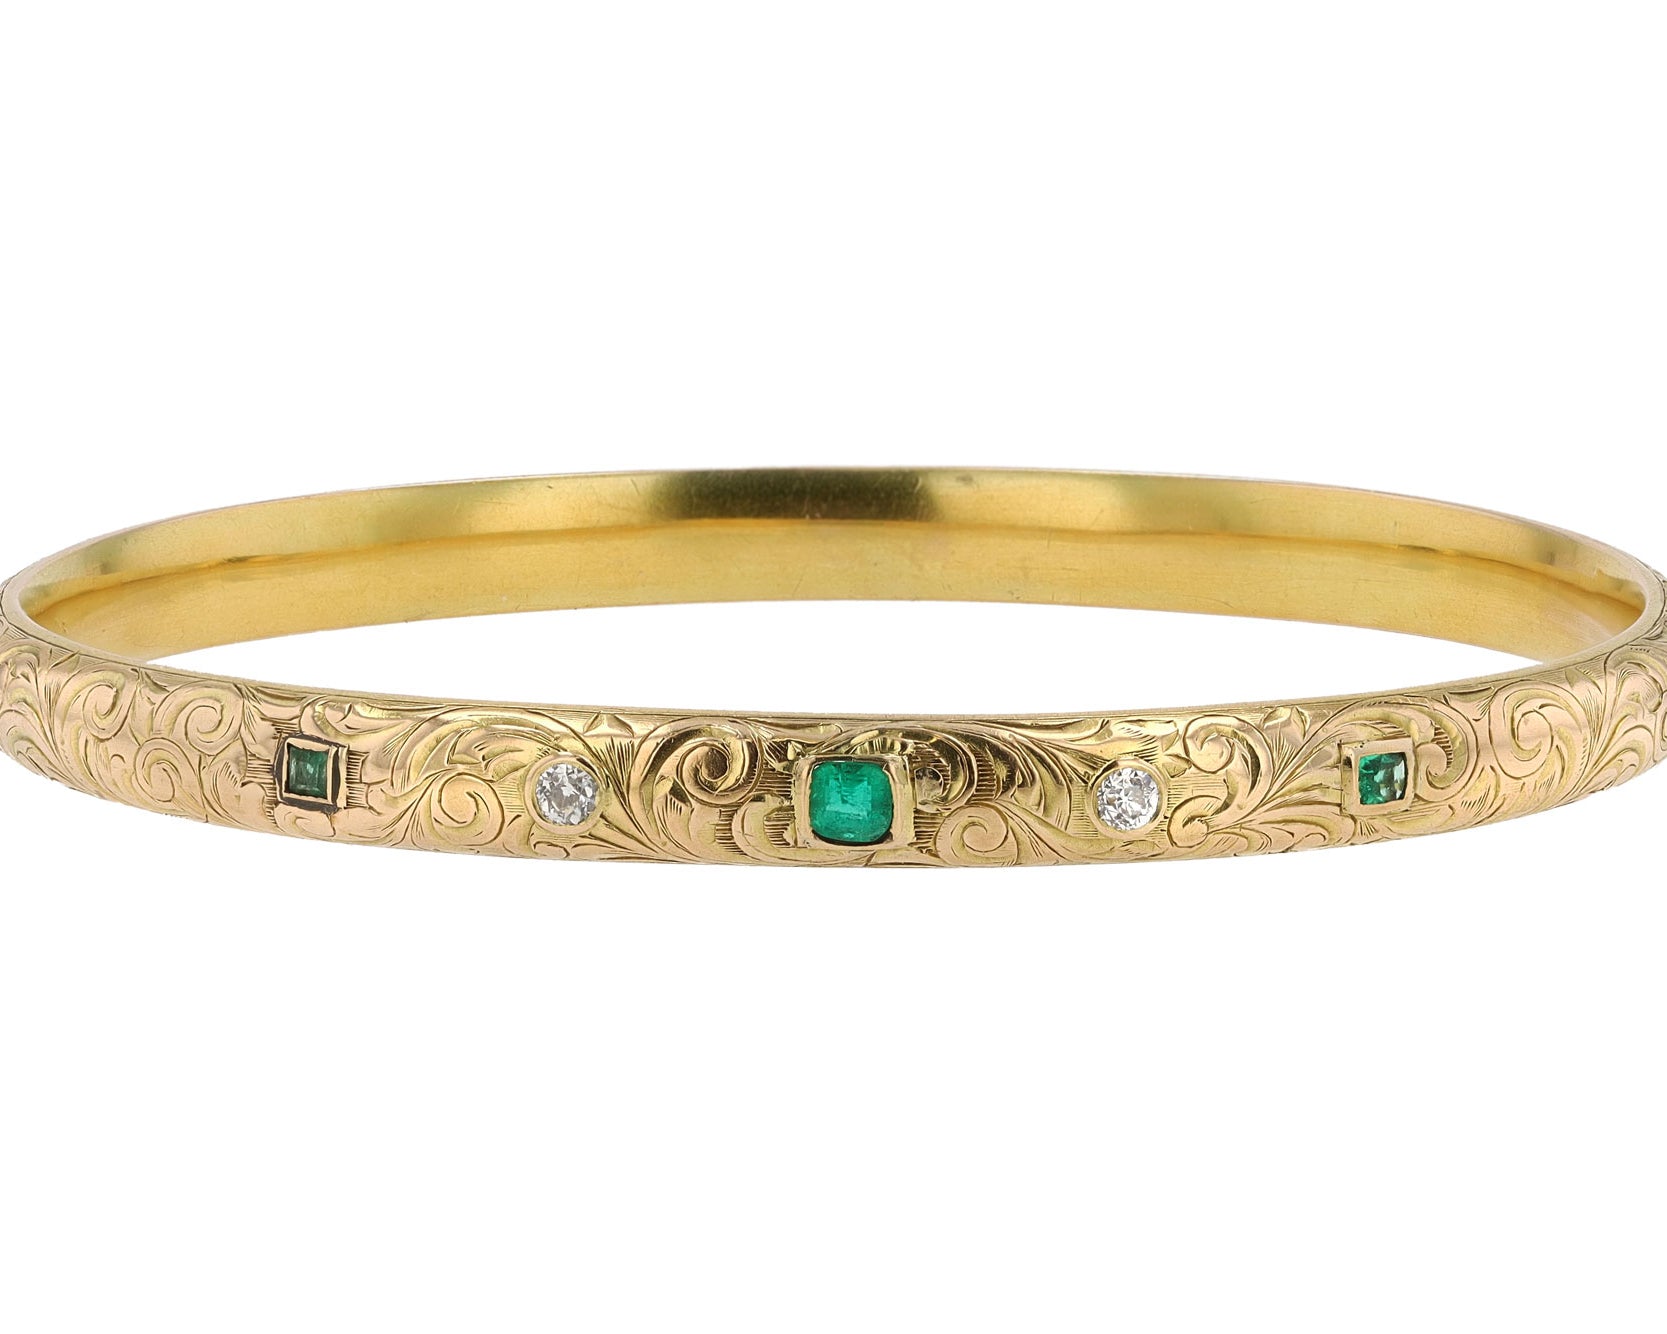 Antique Art Nouveau Diamond and Emerald Engraved Bangle